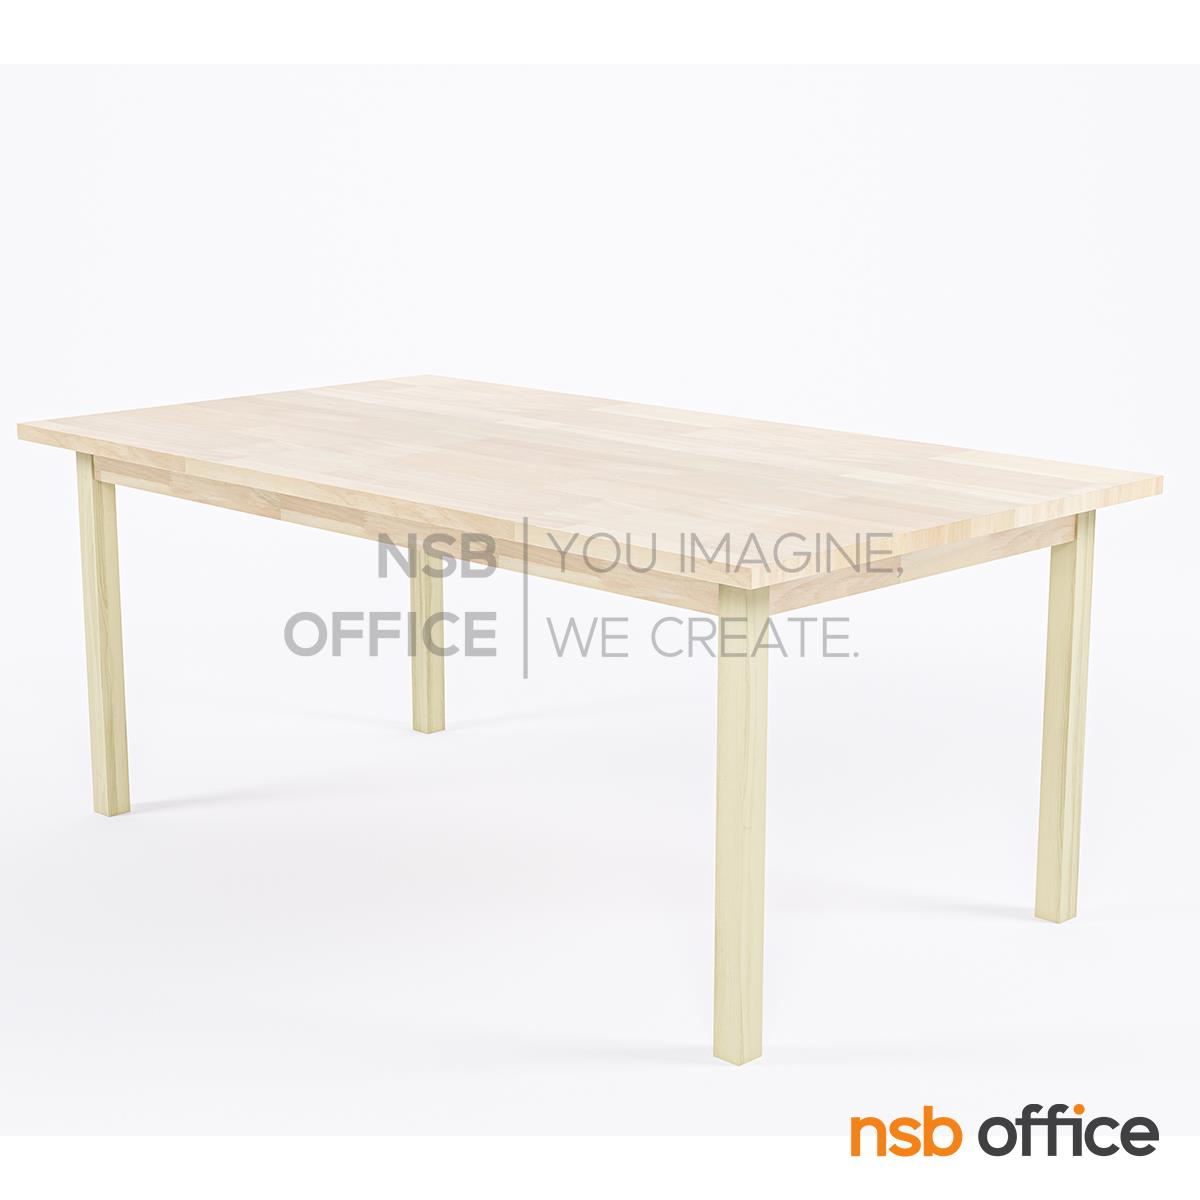 G20A051:โต๊ะสี่เหลี่ยมผืนผ้าไม้ยางพารา รุ่น Ishbel (อิชเบล) ขนาด 180W*100D cm. 